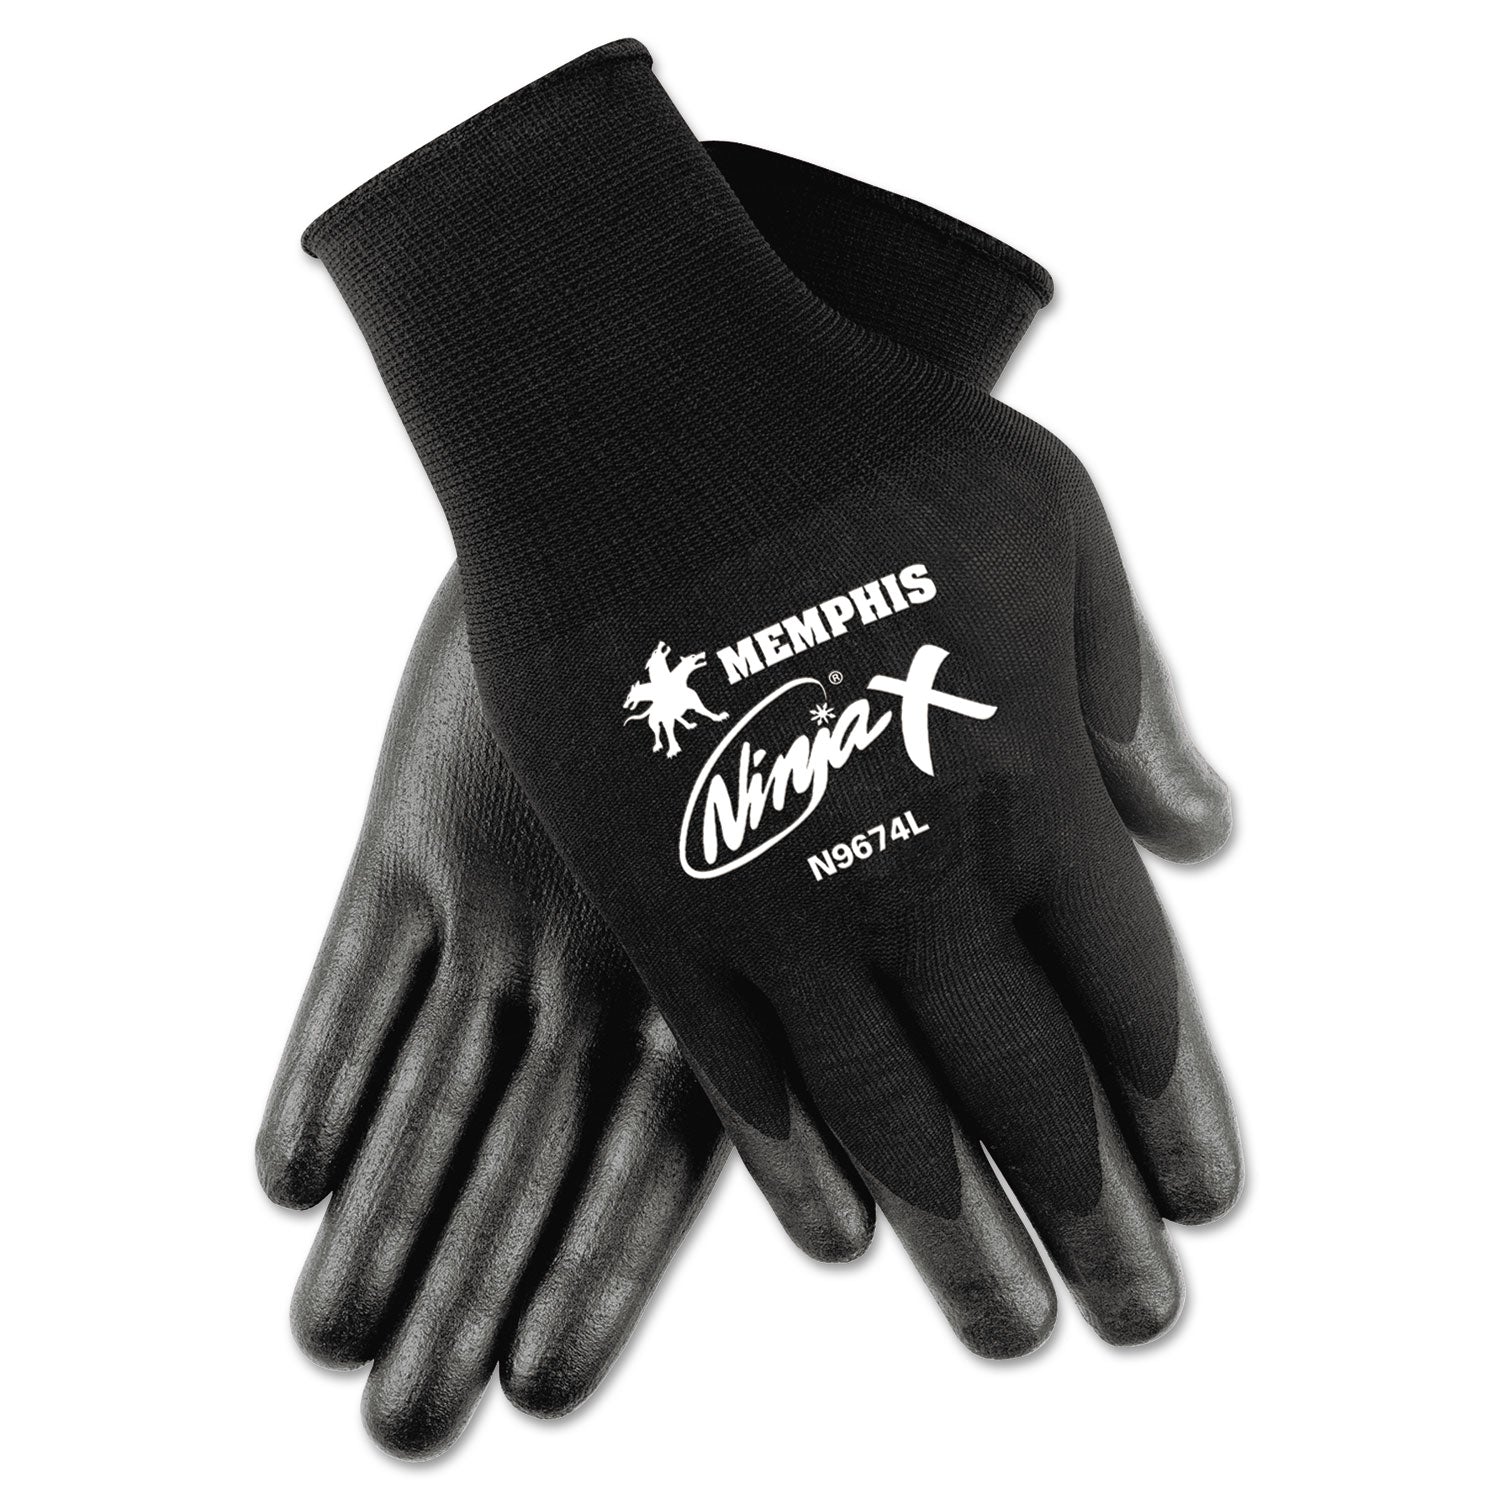 Ninja x Bi-Polymer Coated Gloves, Medium, Black, Pair - 